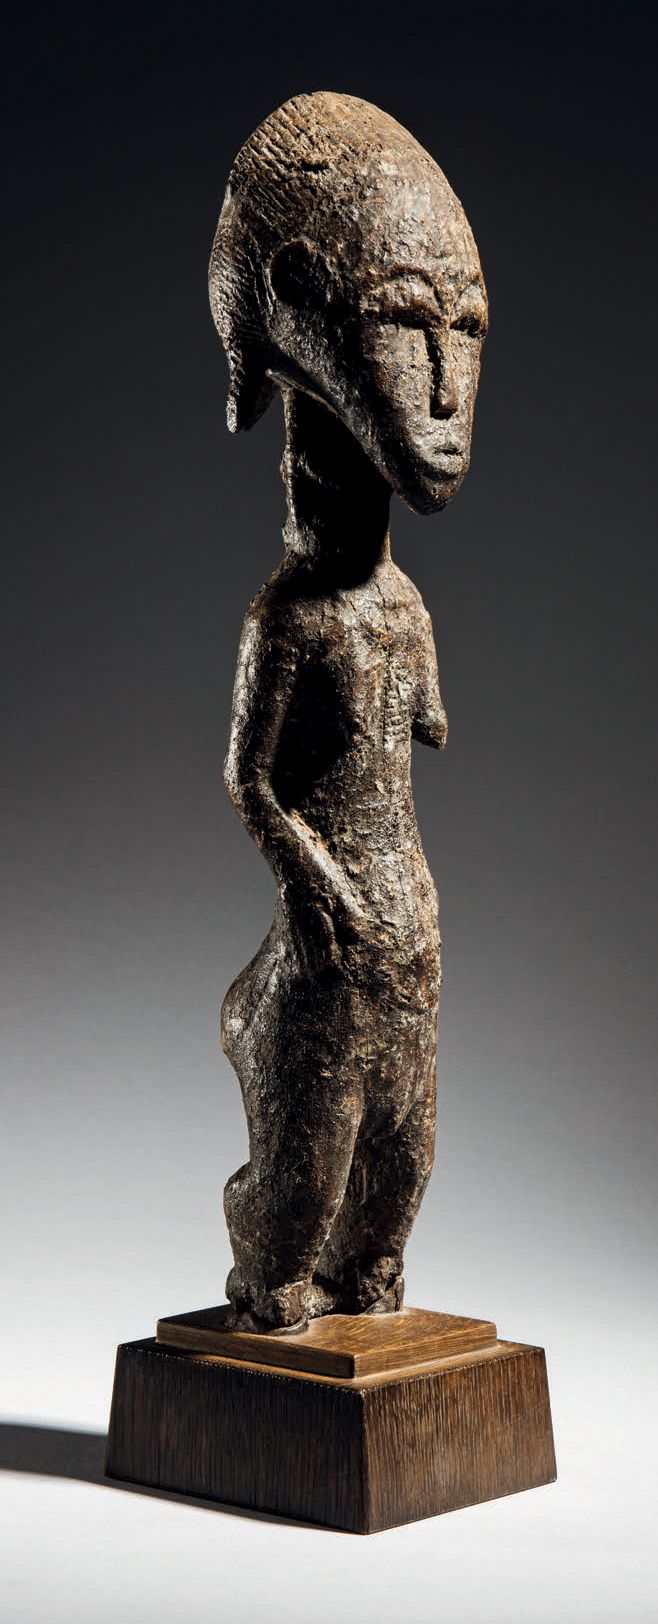 Null - ESTATUA BAULE, COSTA DE MARFIL
Madera
H. 39 cm
Representa una figura feme&hellip;